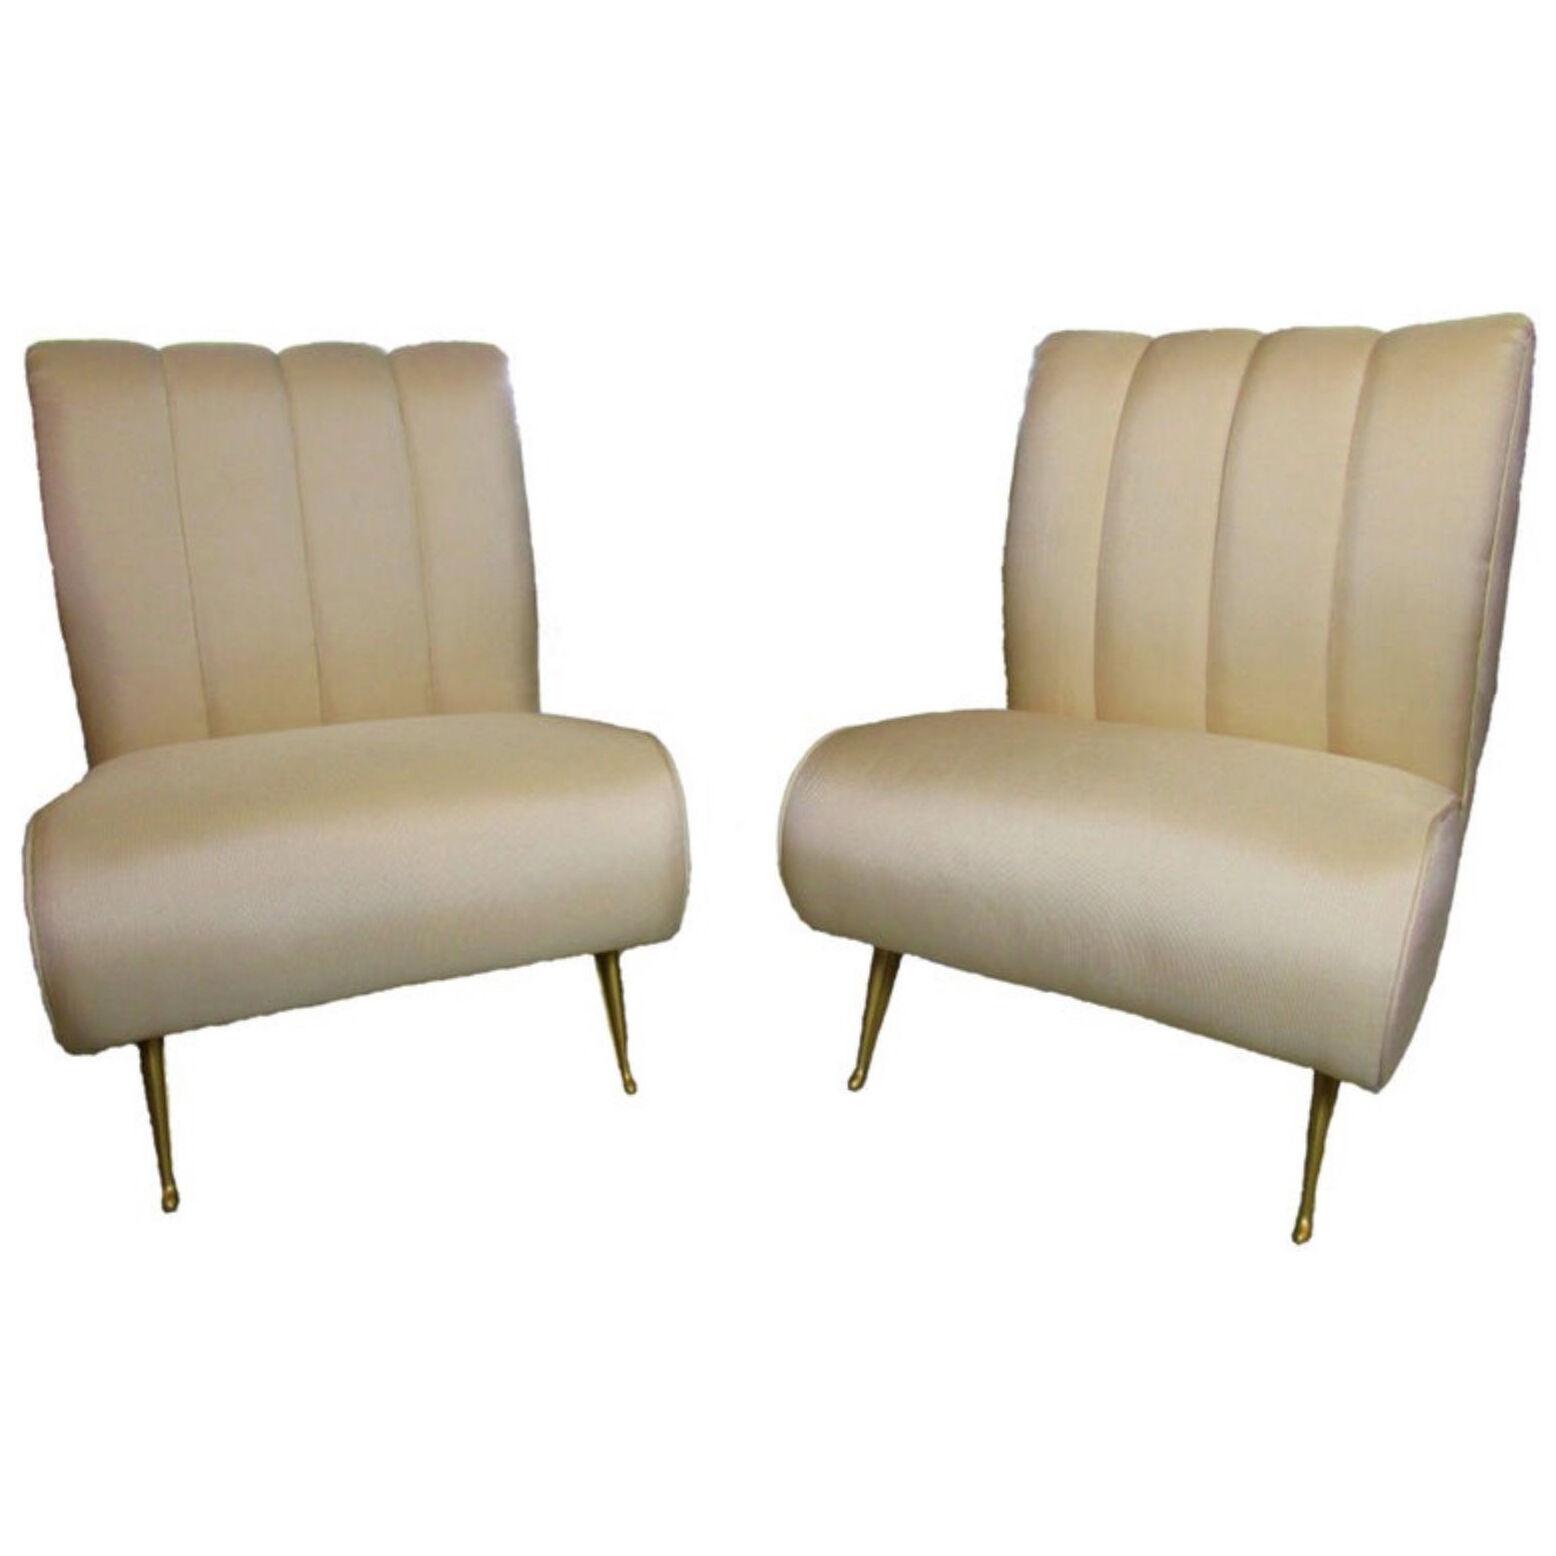 Pair of Italian Modern Slipper Chairs, Attributed to Gio Ponti 